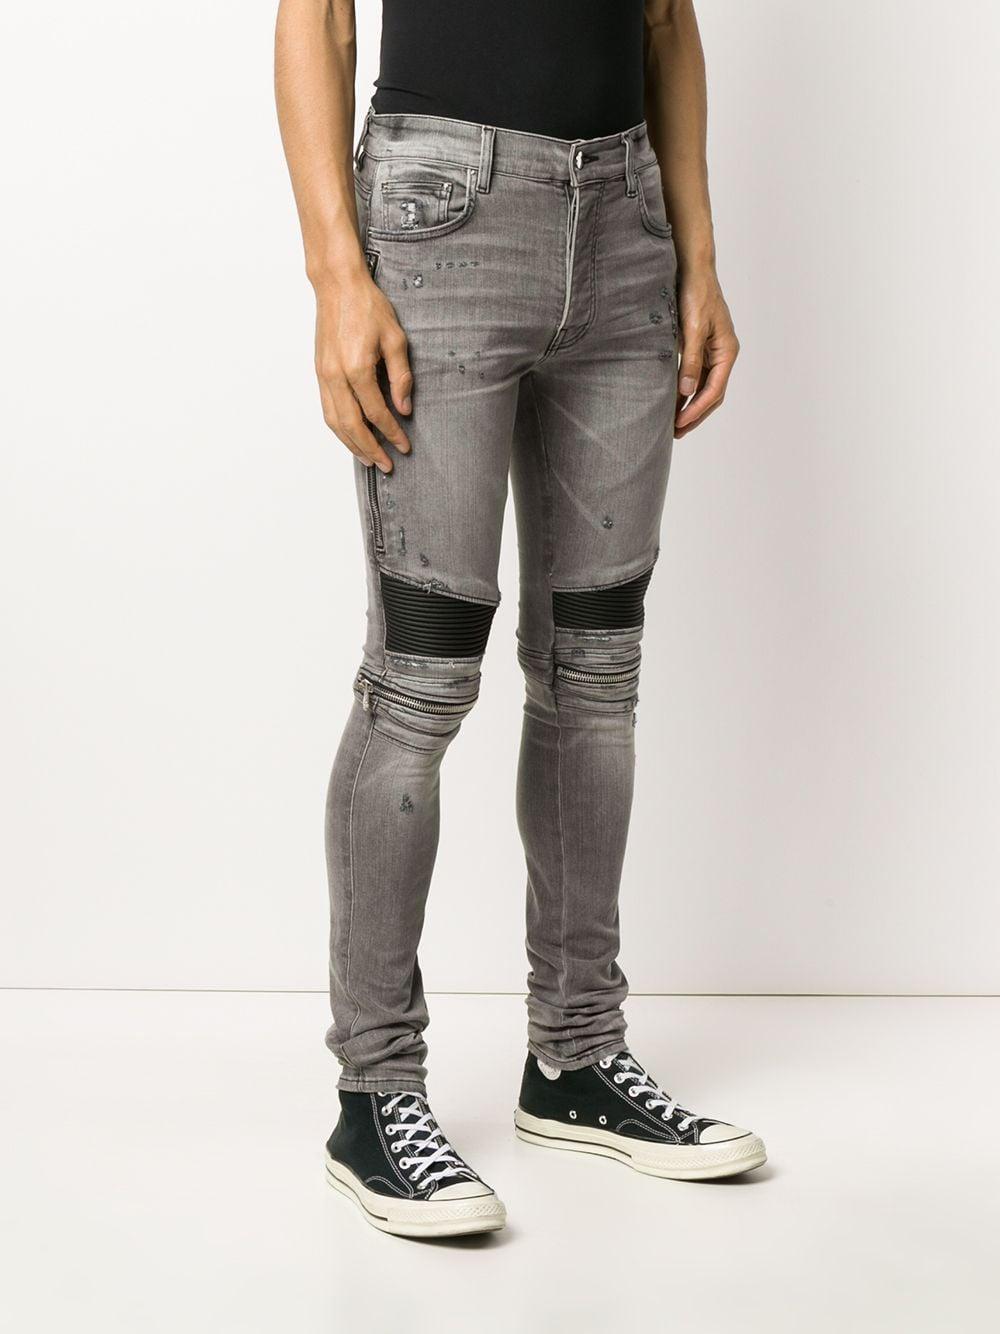 Amiri Denim Biker Skinny Jeans in Grey (Gray) for Men - Lyst